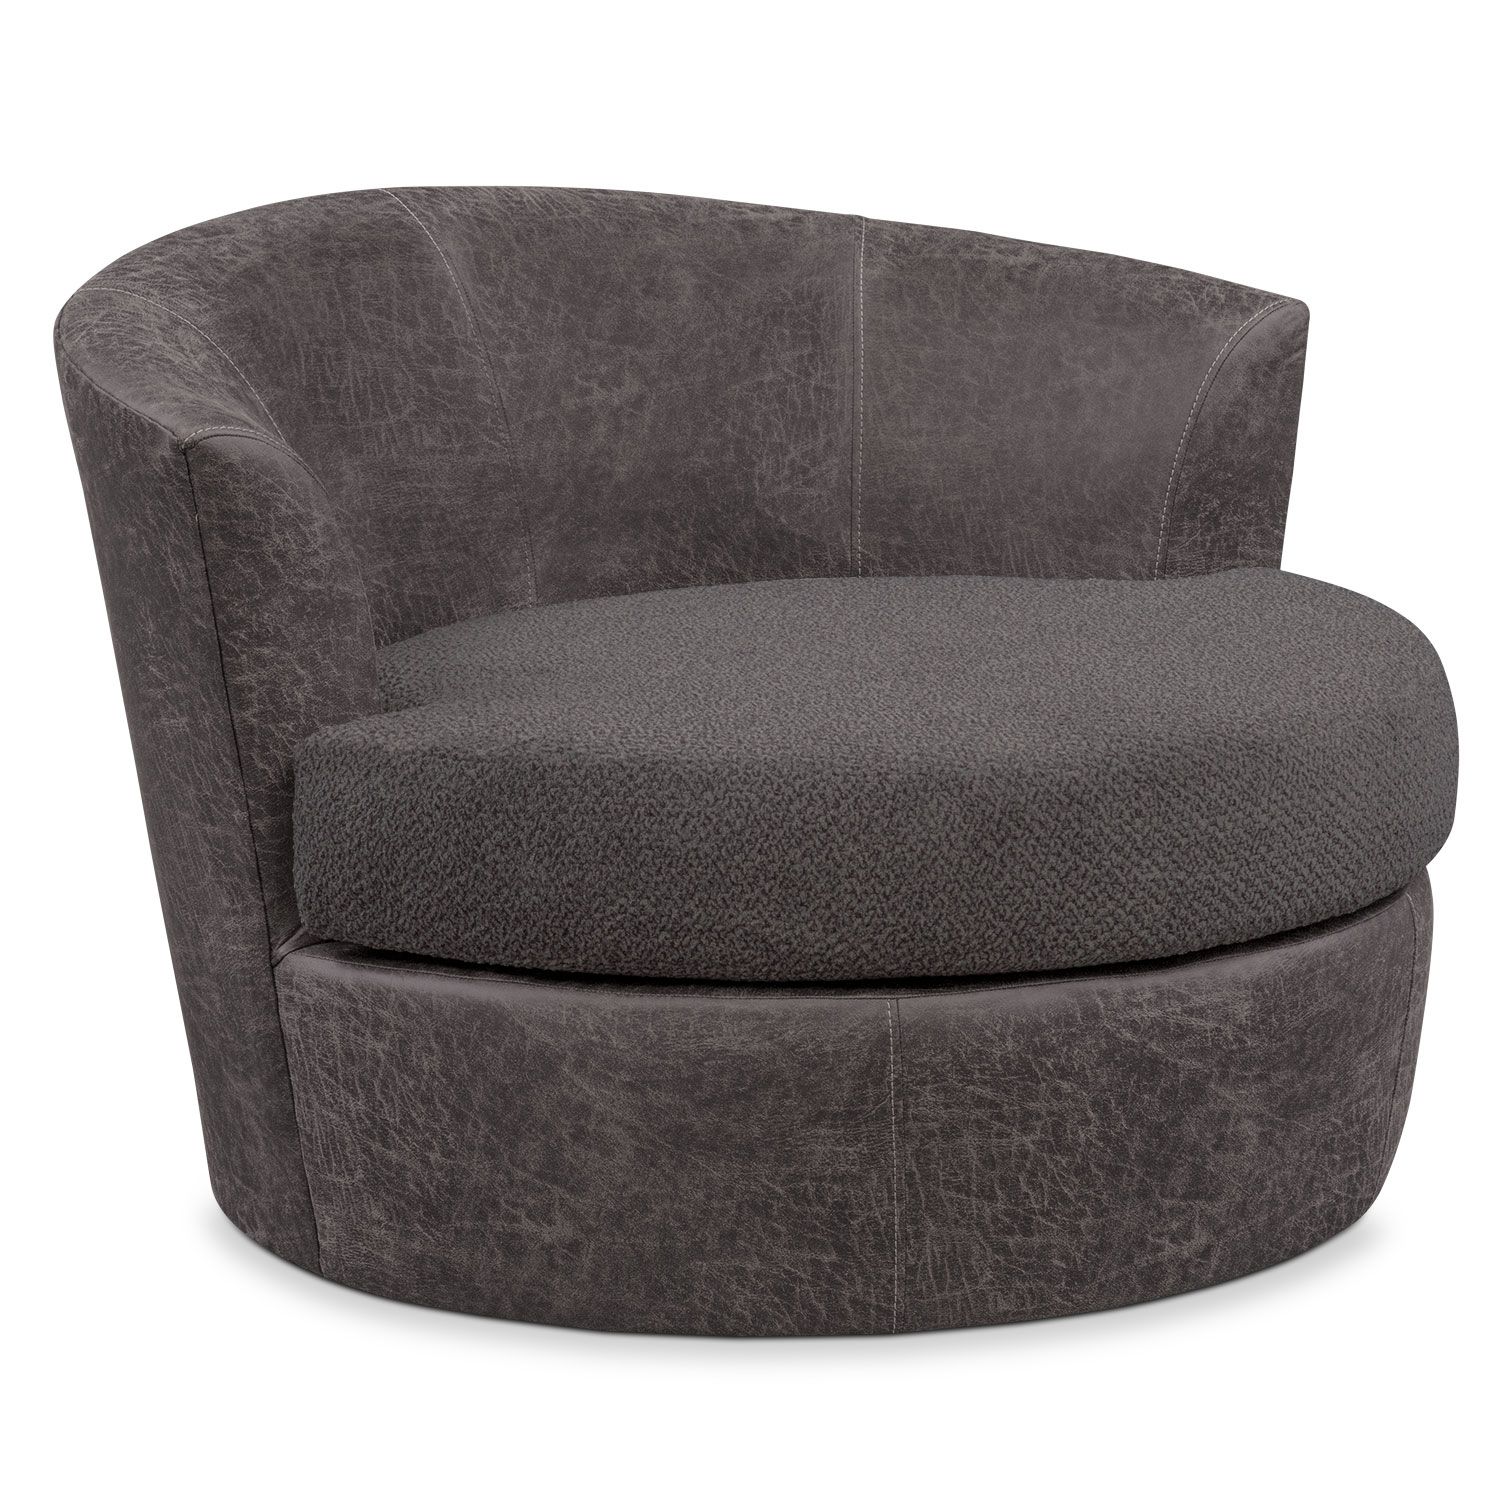 Brando Swivel Swivel Chair | Value City Furniture And Mattresses Regarding Loft Smokey Swivel Accent Chairs (View 5 of 20)